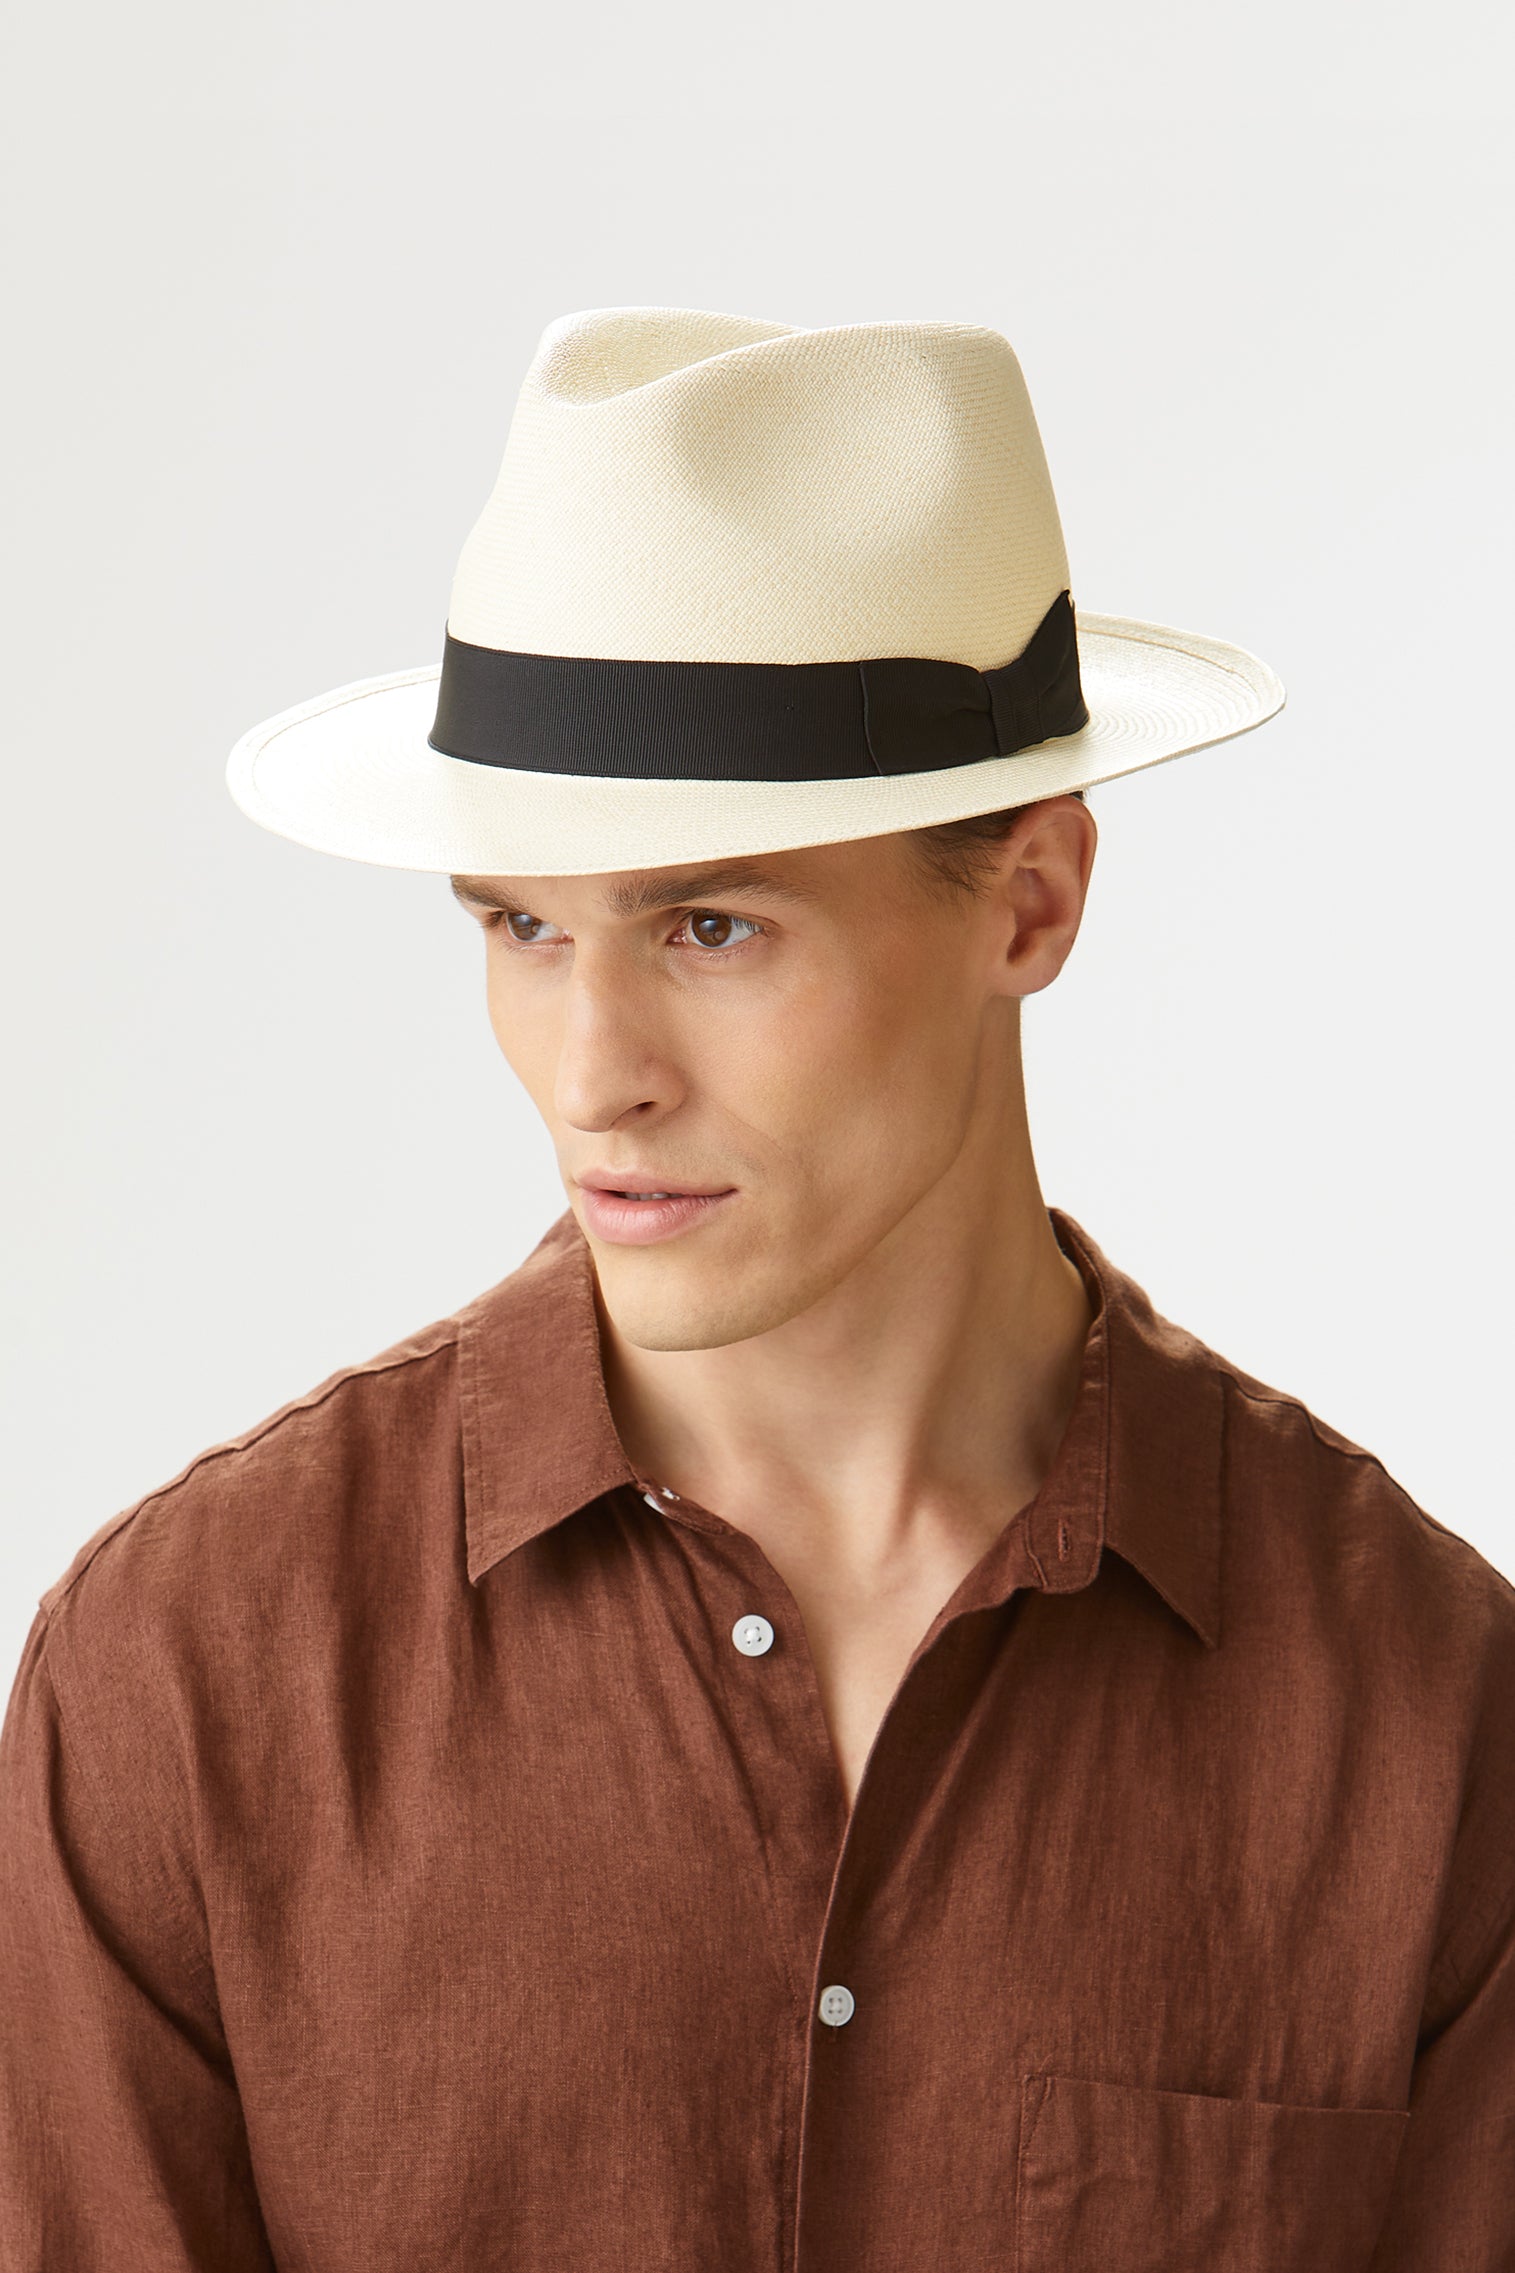 Classic Panama - Panamas, Straw and Sun Hats for Men - Lock & Co. Hatters London UK